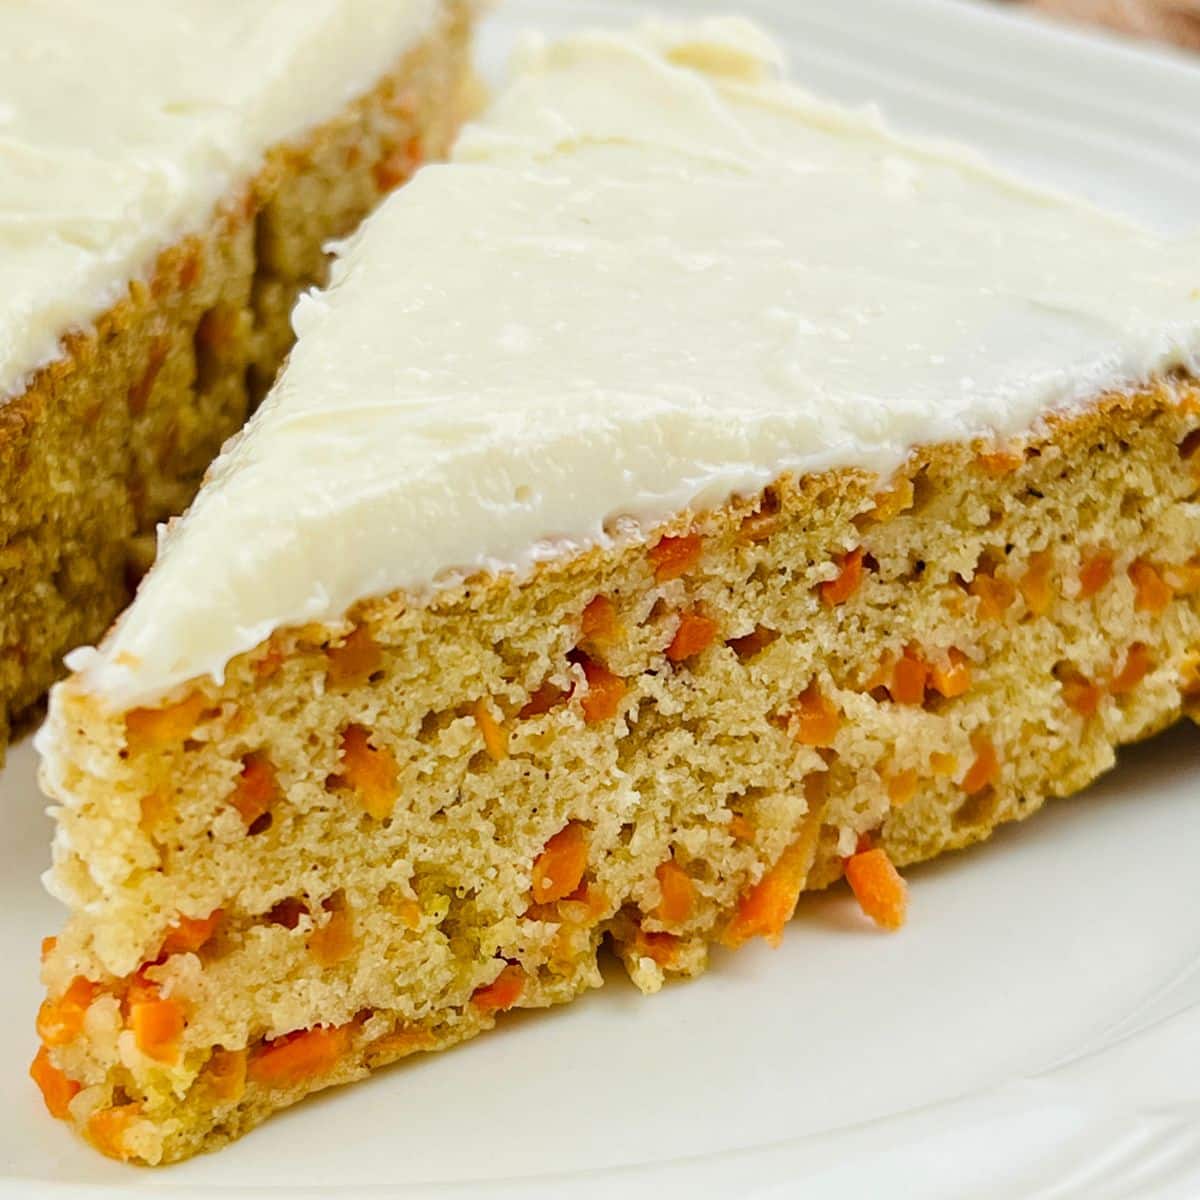 Eggless carrot cake - gluten-free, vegan - Chris says nature